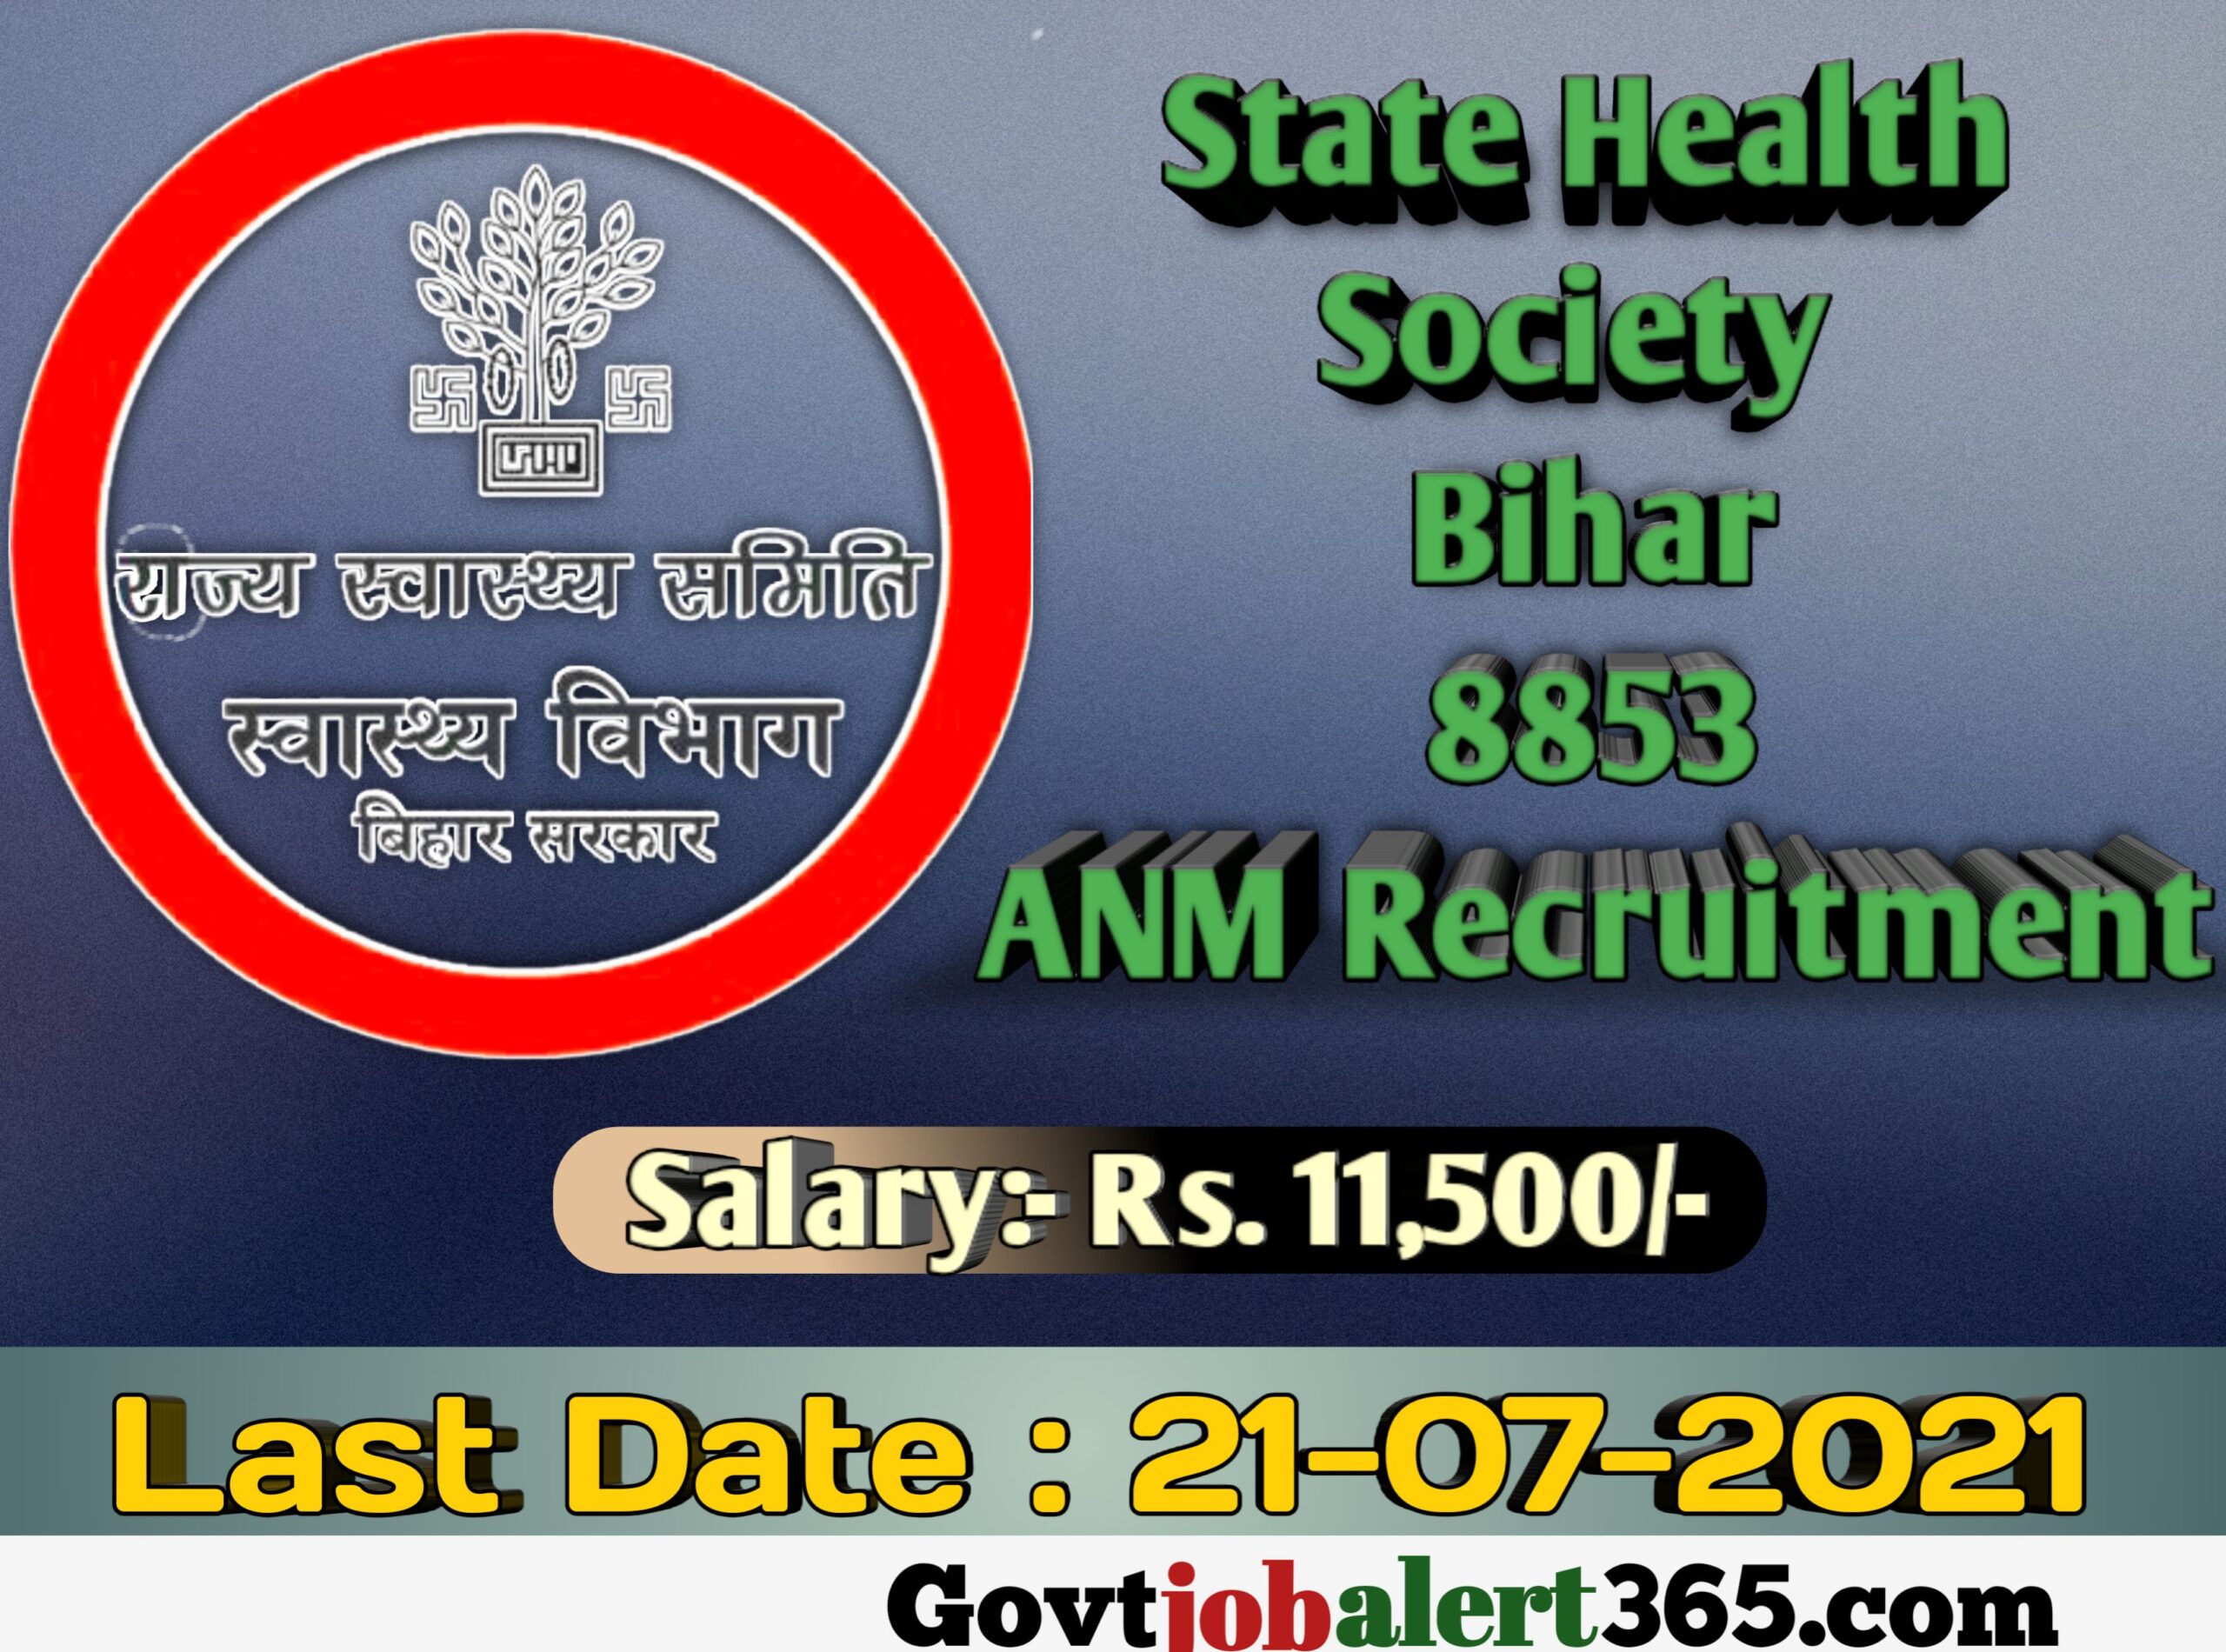 State Health Society Bihar ANM Recruitment 2021